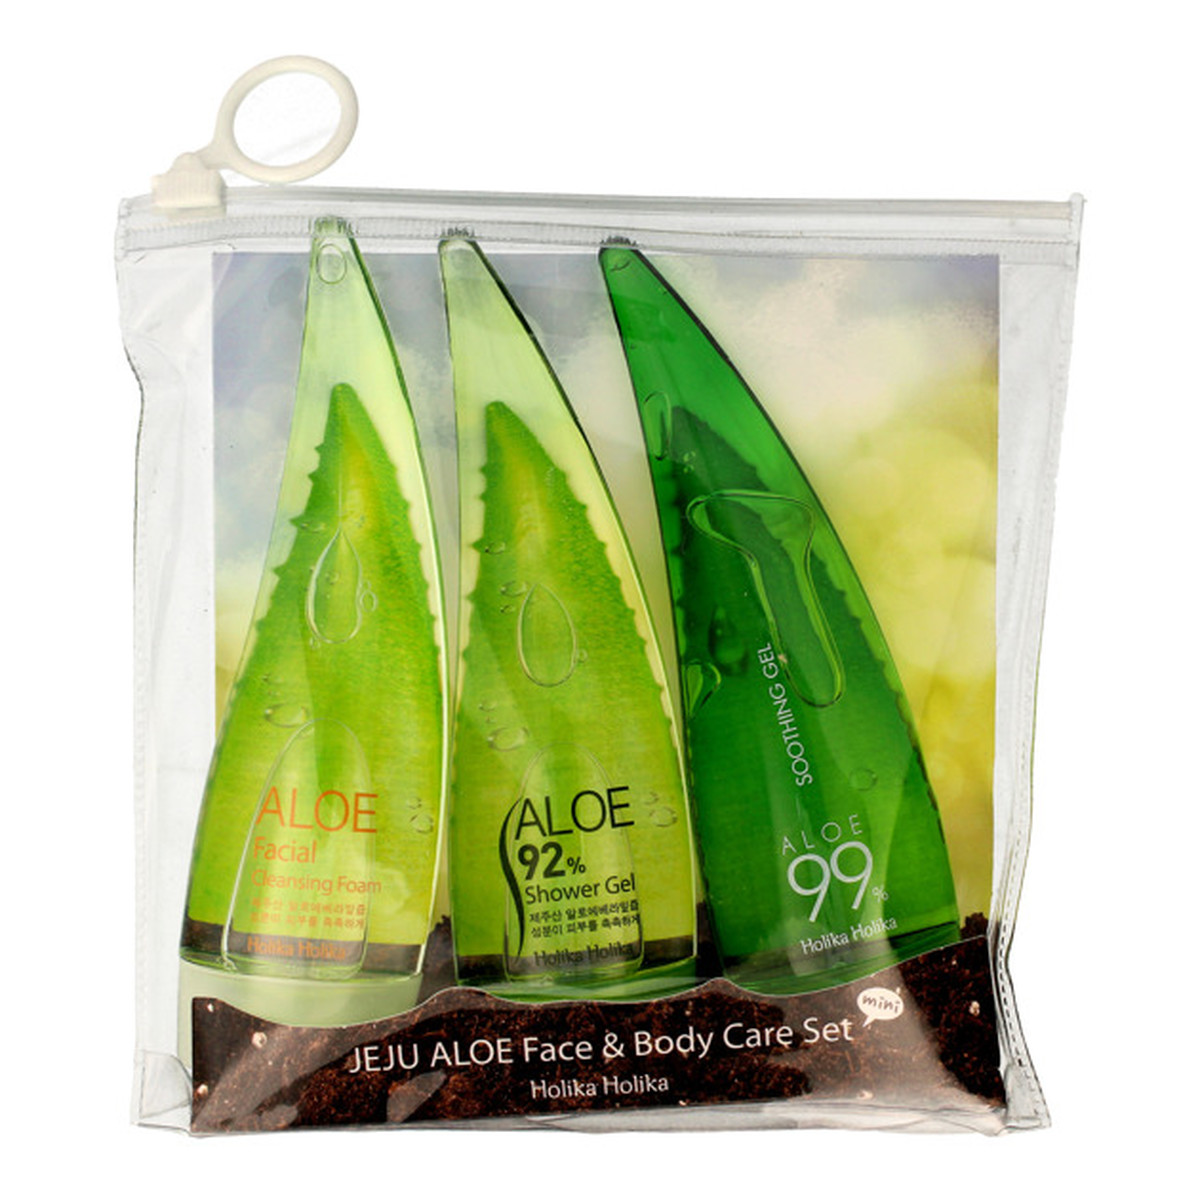 Holika Holika Aloe 99% Zestaw Jeju Aloe Set (żel+pianka+żel pod prysznic) 1op.-55mlx3 165ml